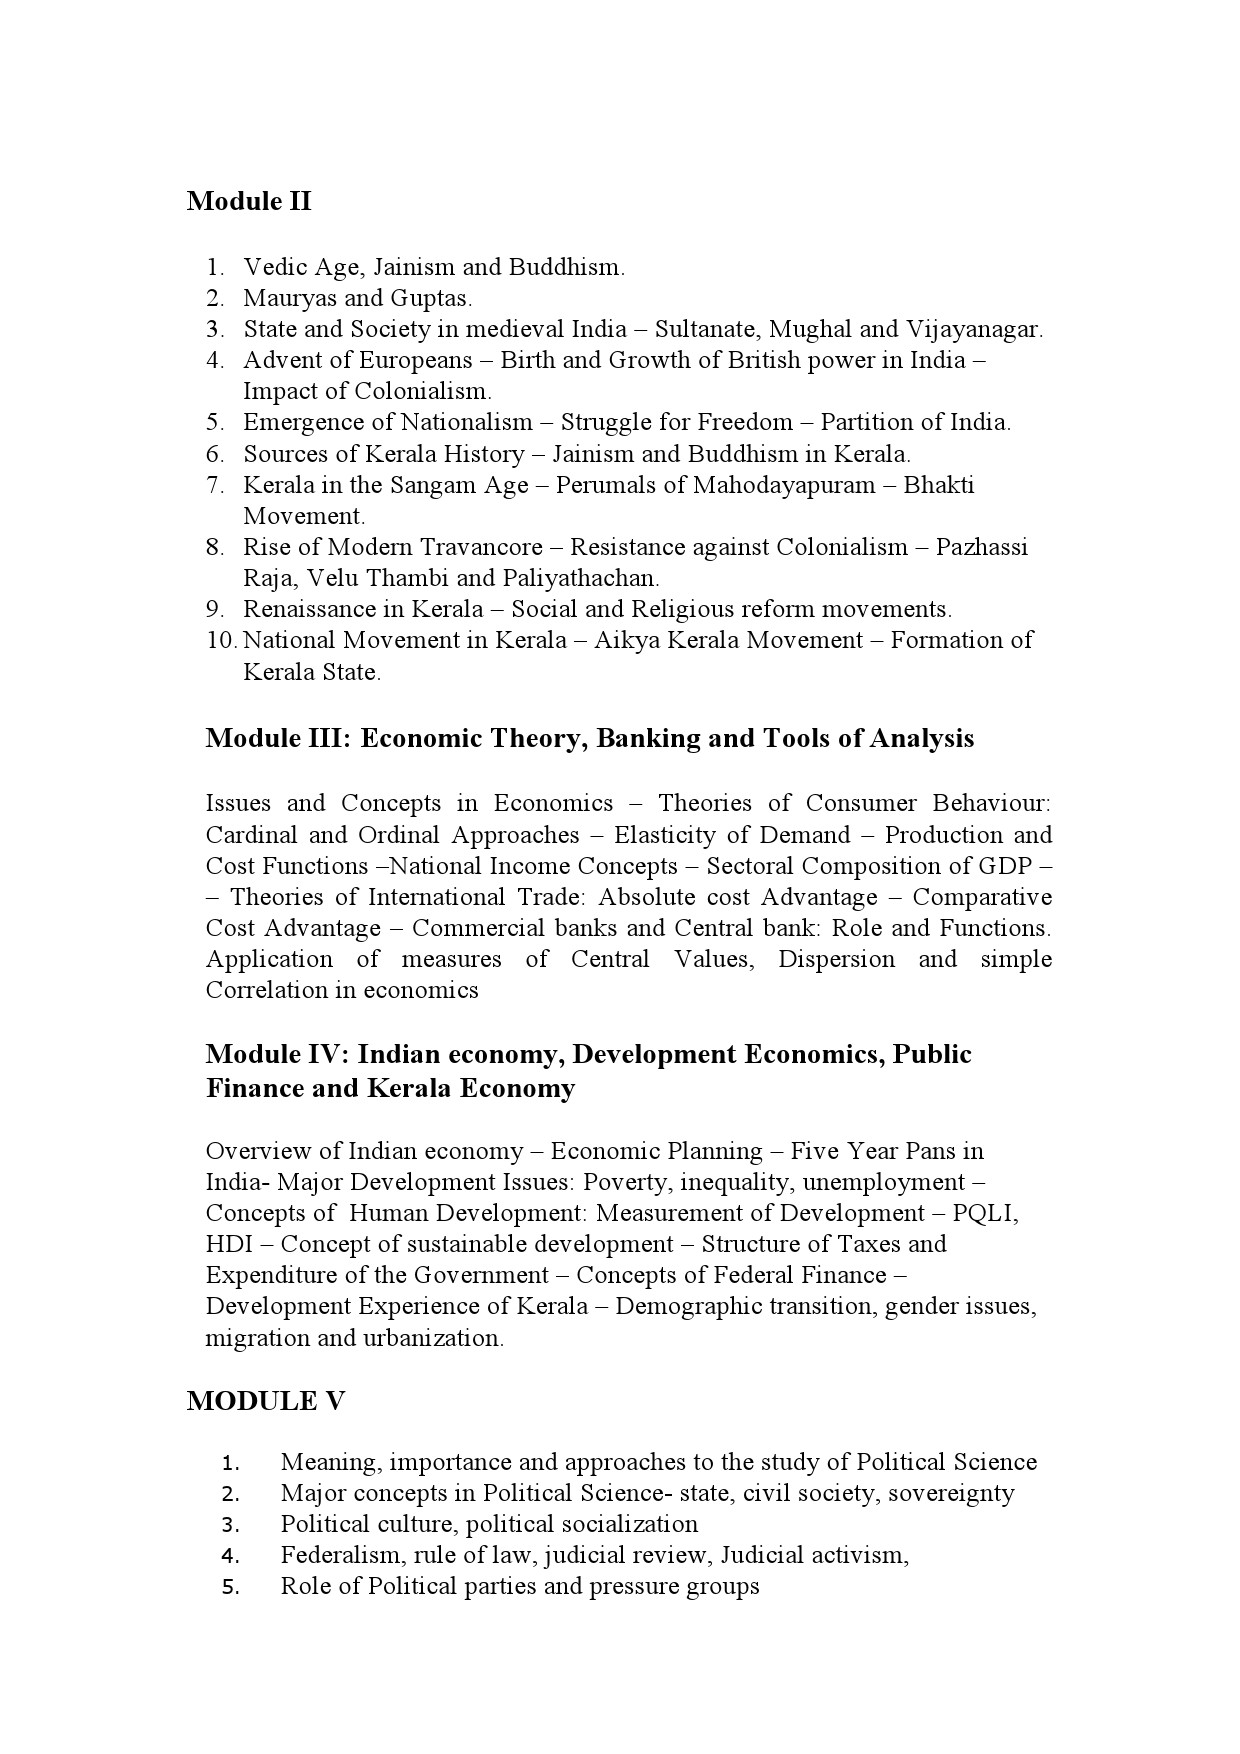 High School Assistant Social Science Part A Kerala Examination Syllabus 2021 - Notification Image 2